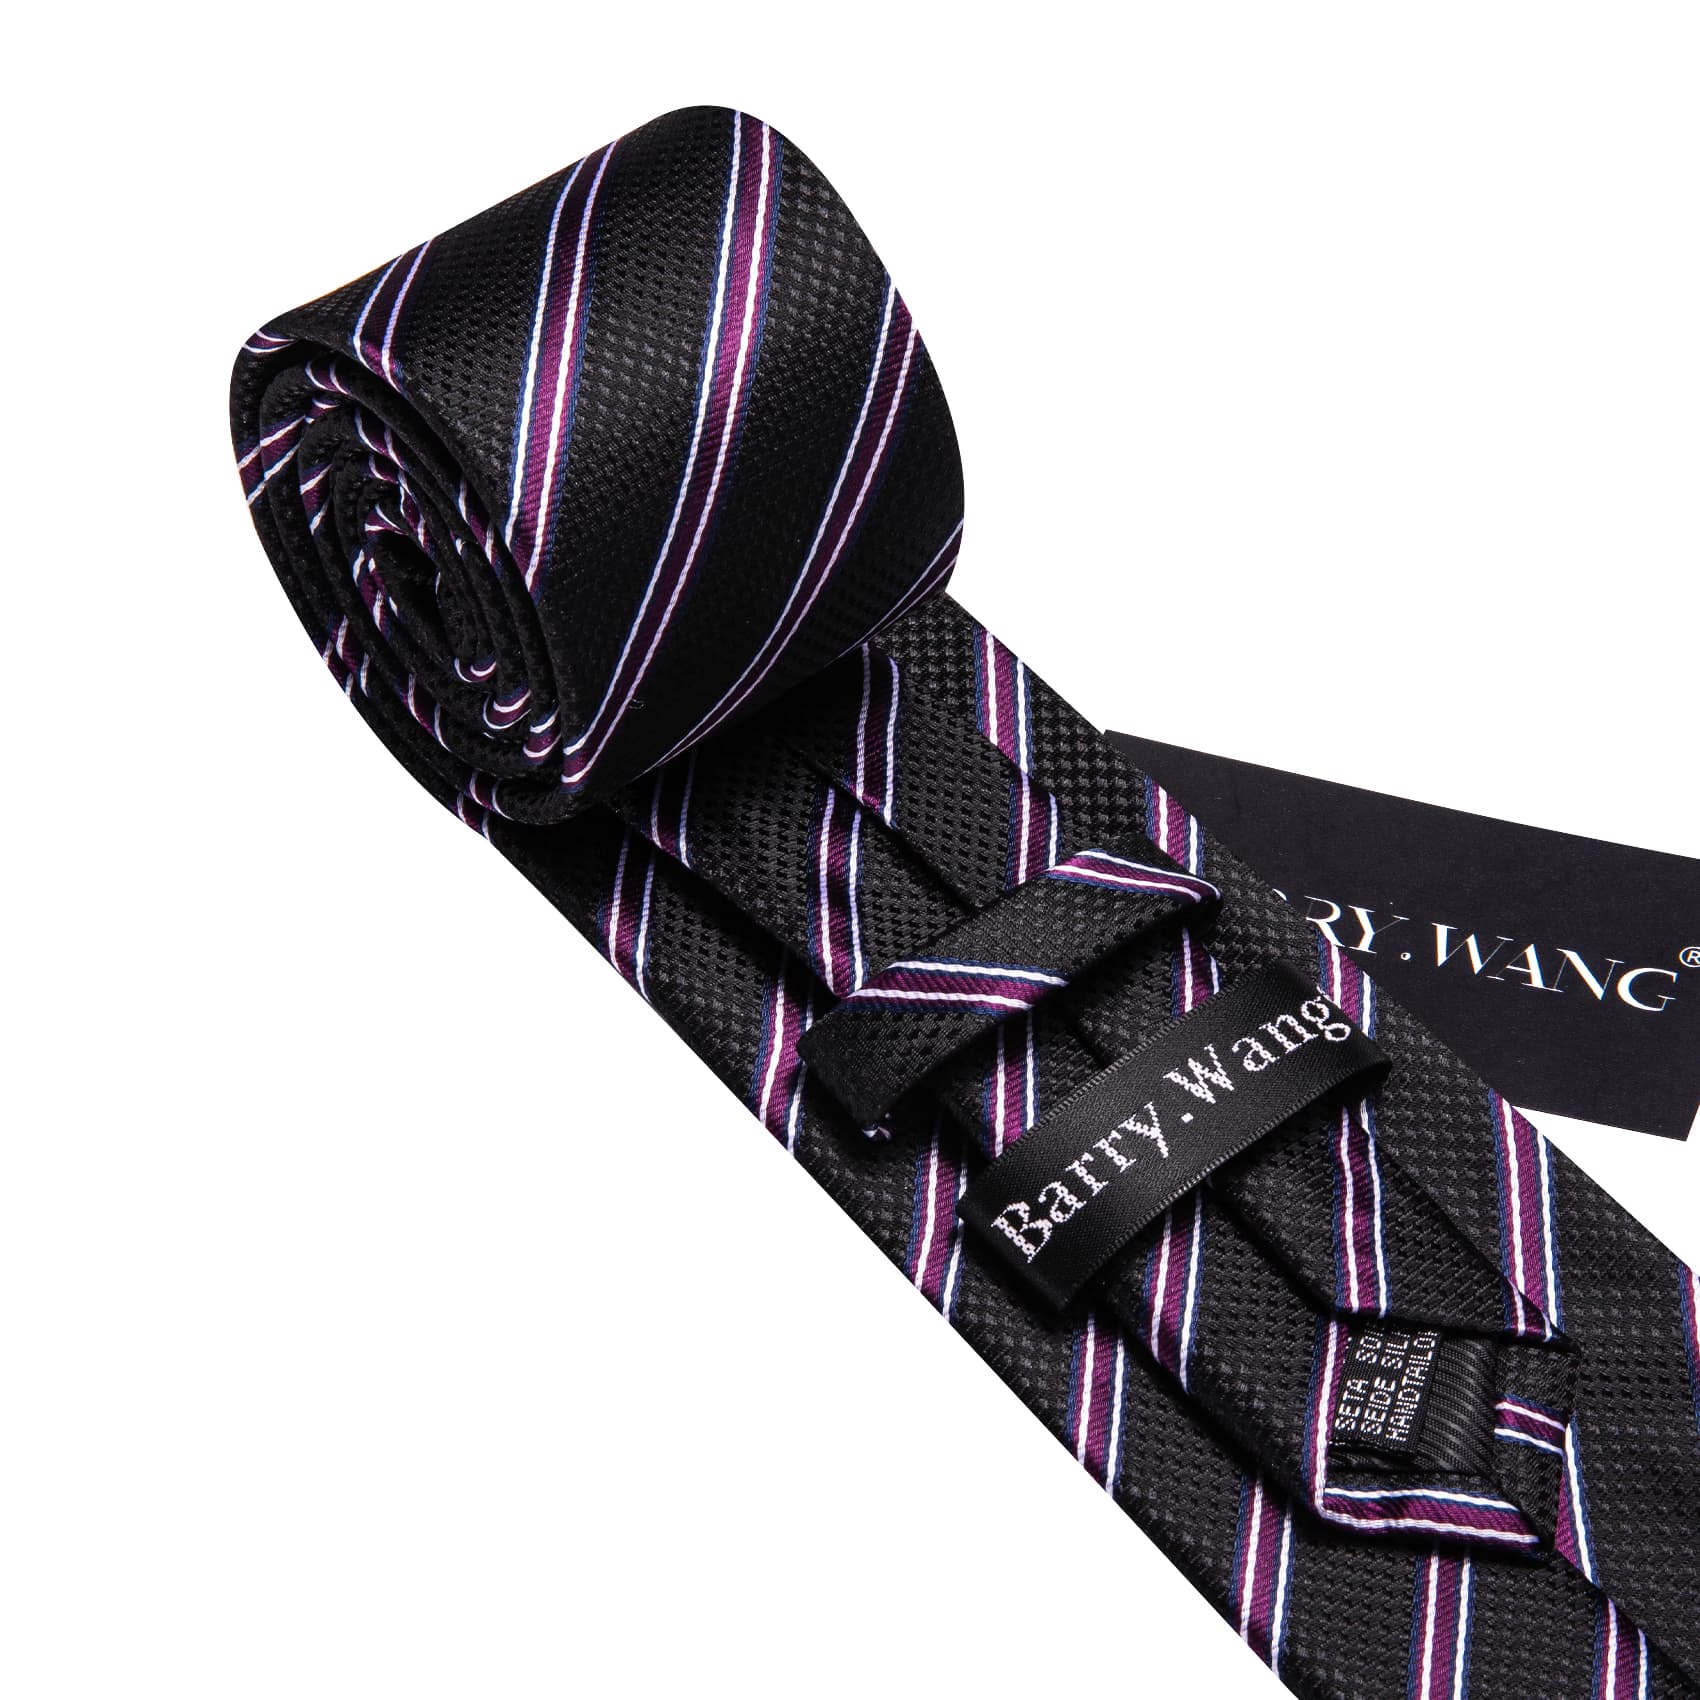  Black Striped Tie with White Purple Stripes Men's Necktie Set